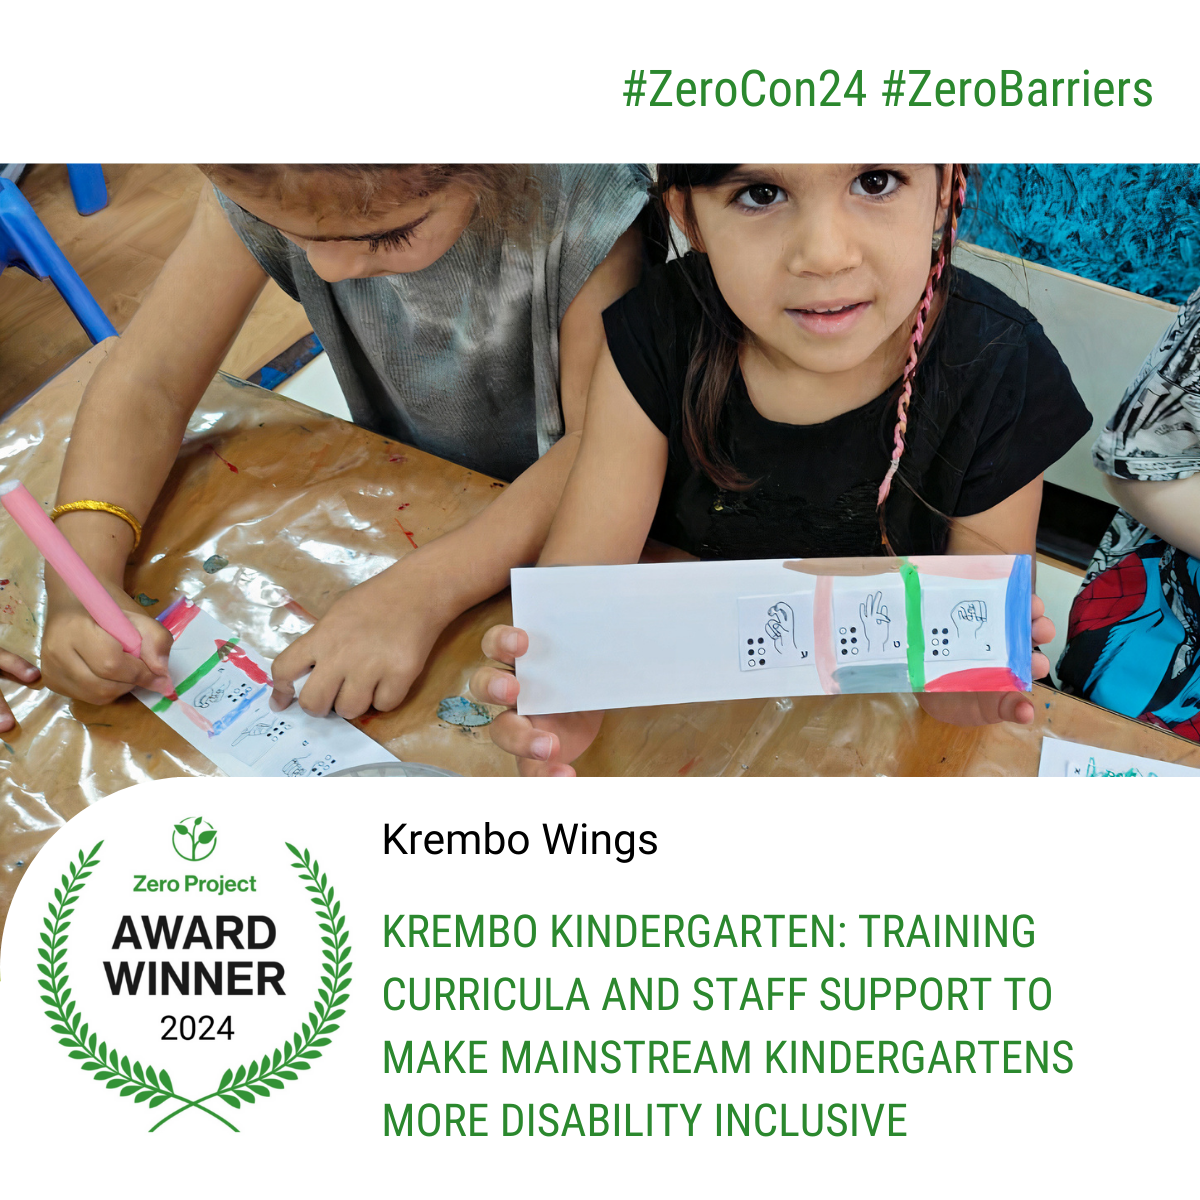 Krembo kindergarten: training curricula and staff support to make mainstream kindergartens more disability inclusive. Zero Project Award Winner 2024